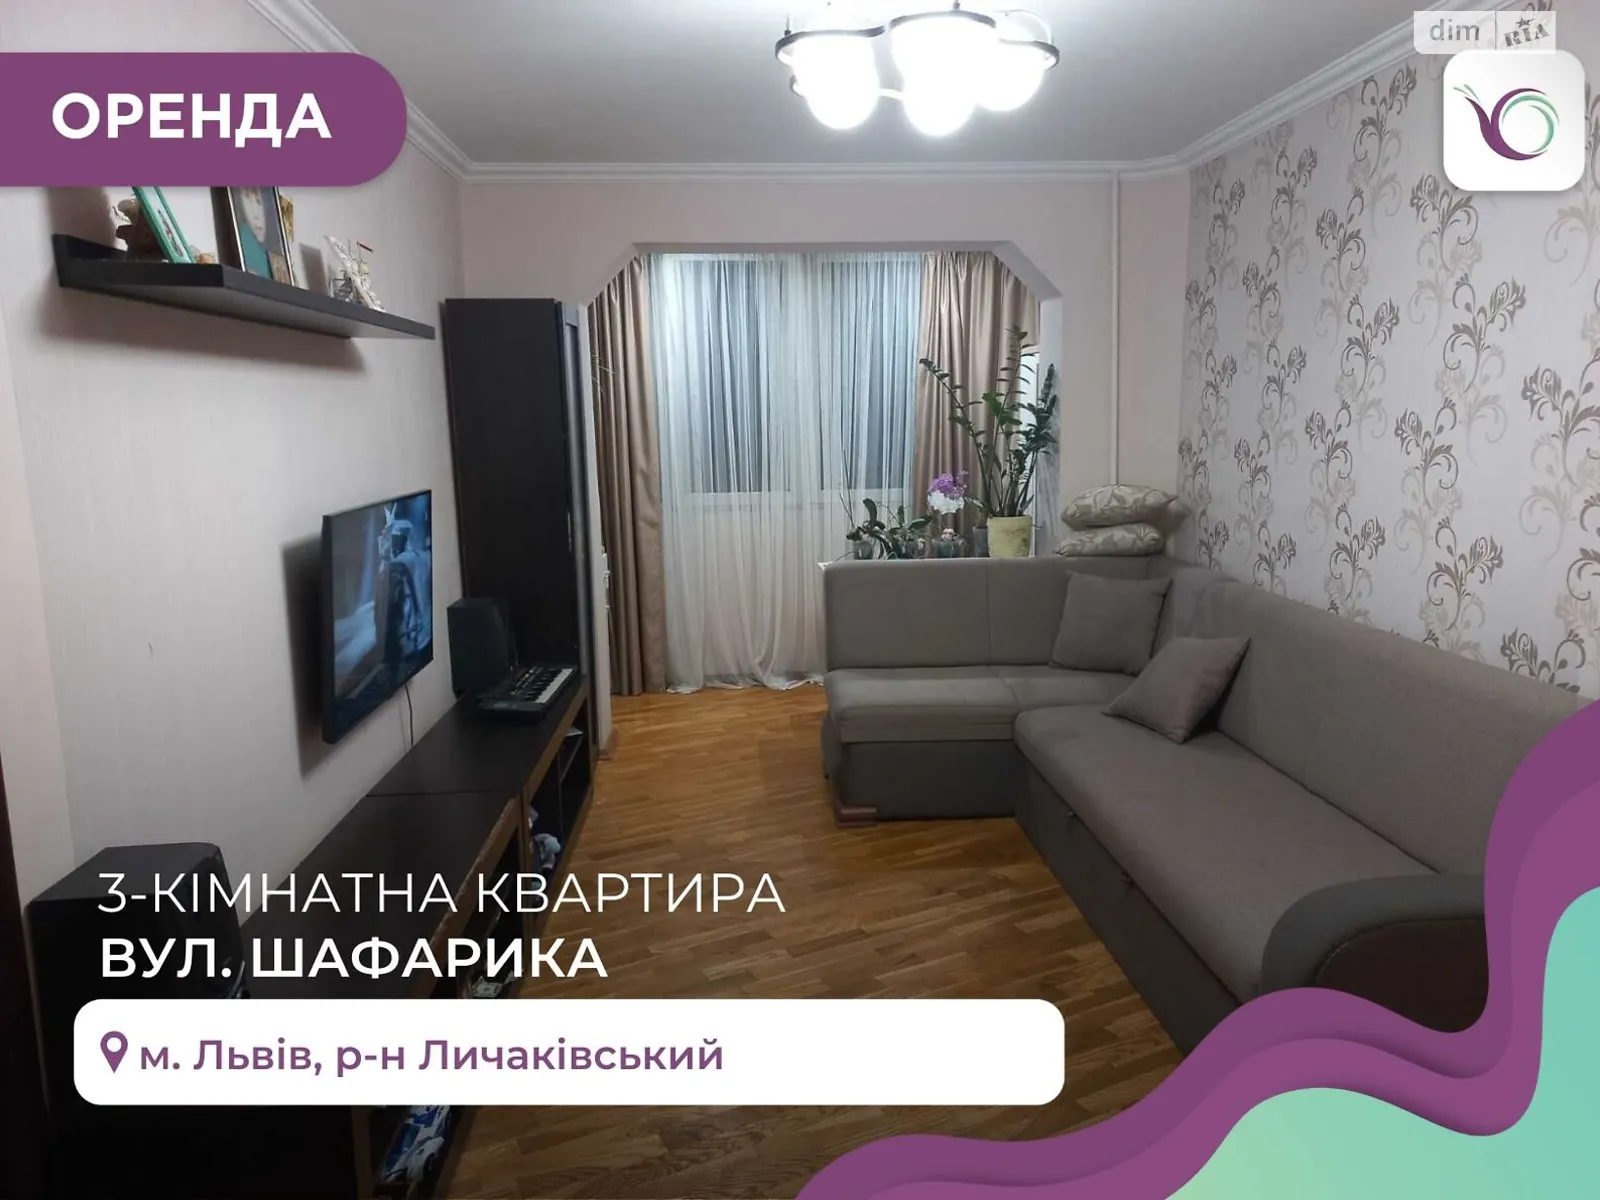 Сдается в аренду 3-комнатная квартира 64 кв. м в Львове, ул. Шафарика